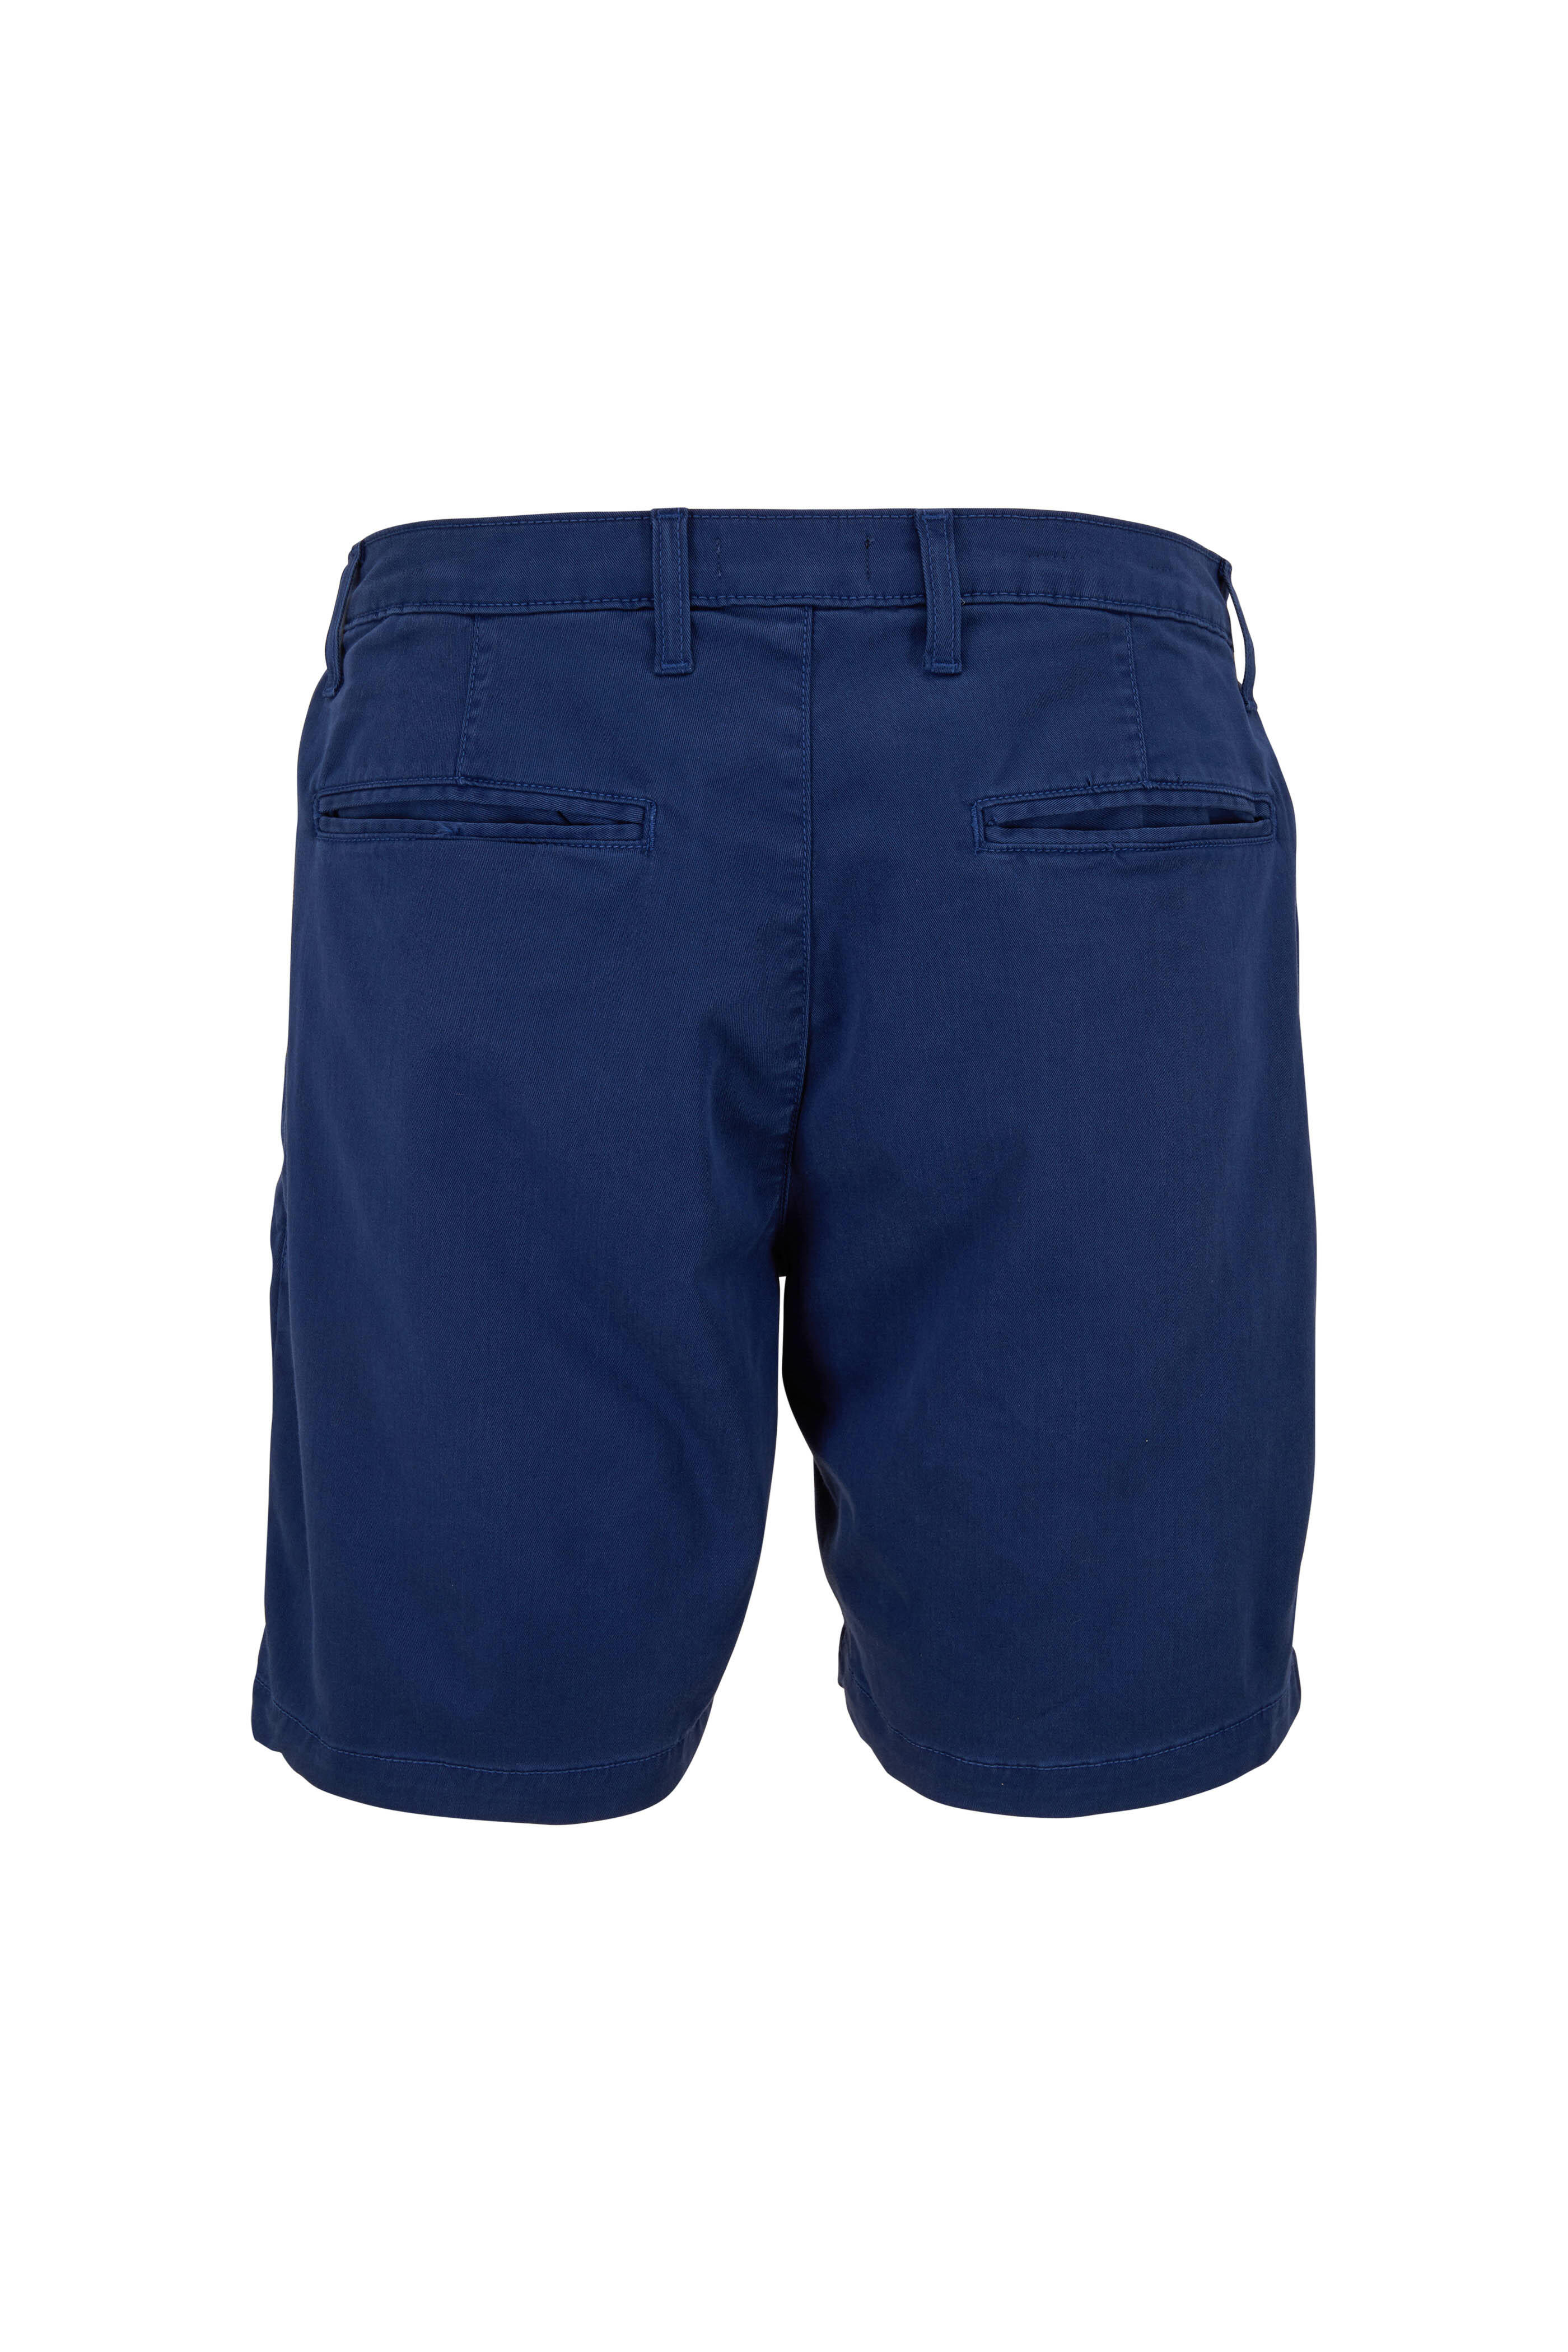 Monfrere - Cruise Marine Blue Stretch Cotton Shorts